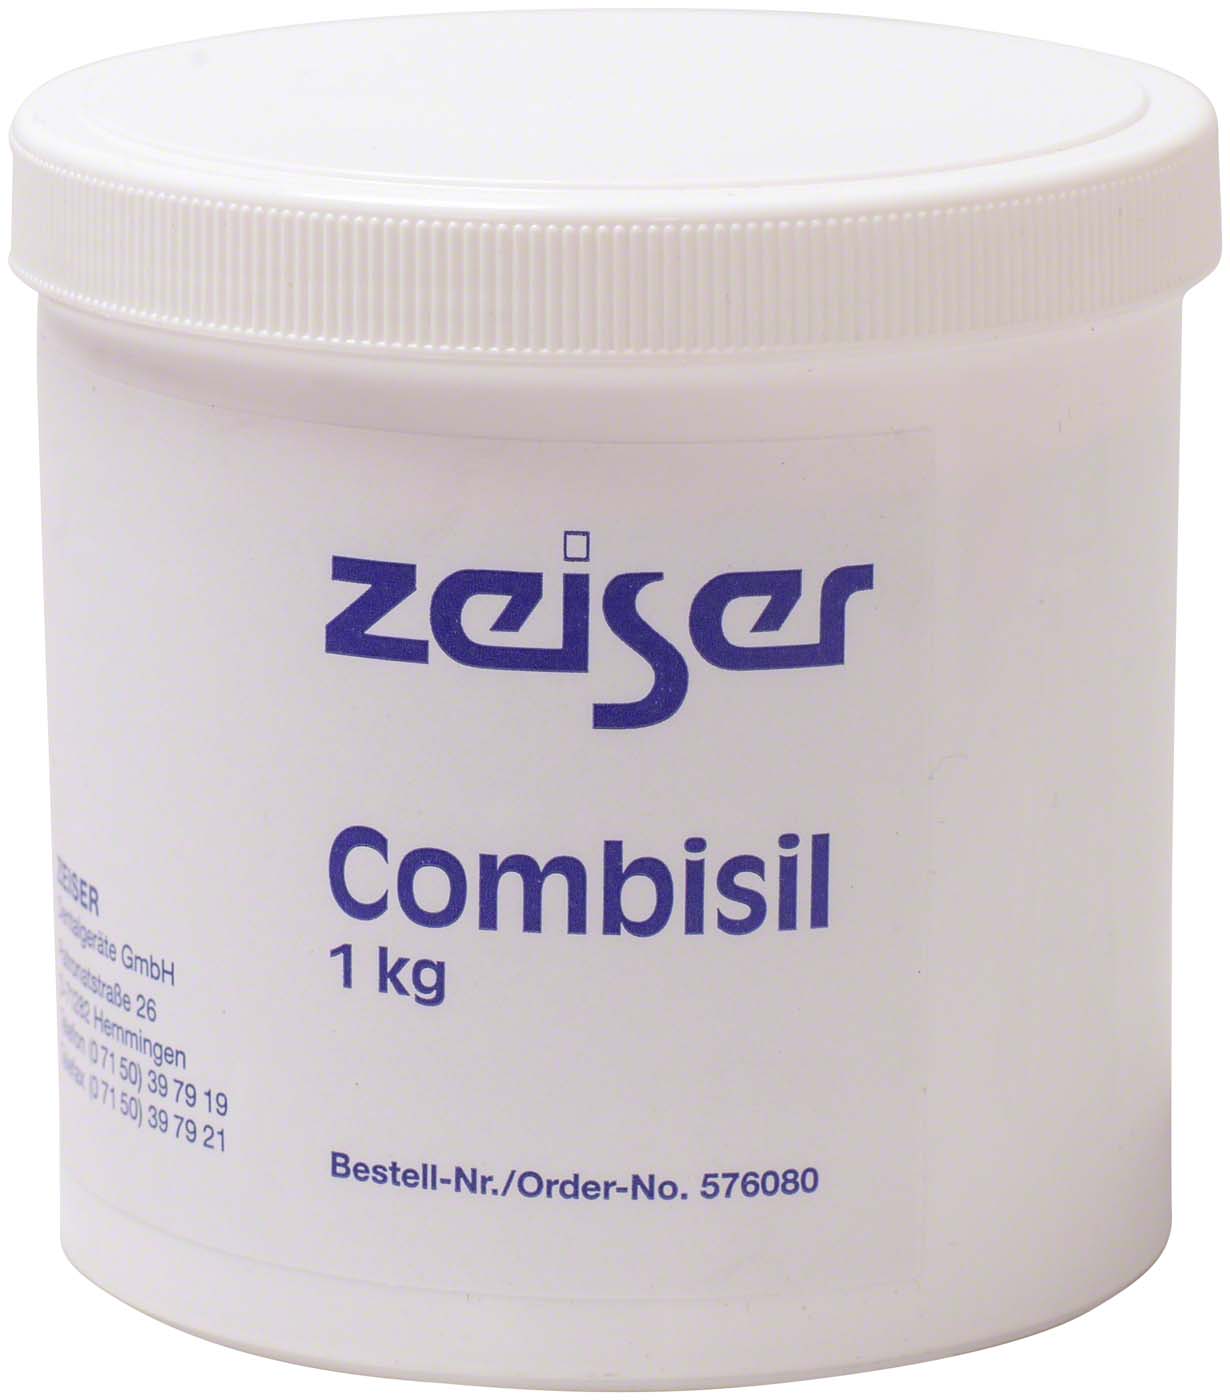 zeiser®-Combisil picodent